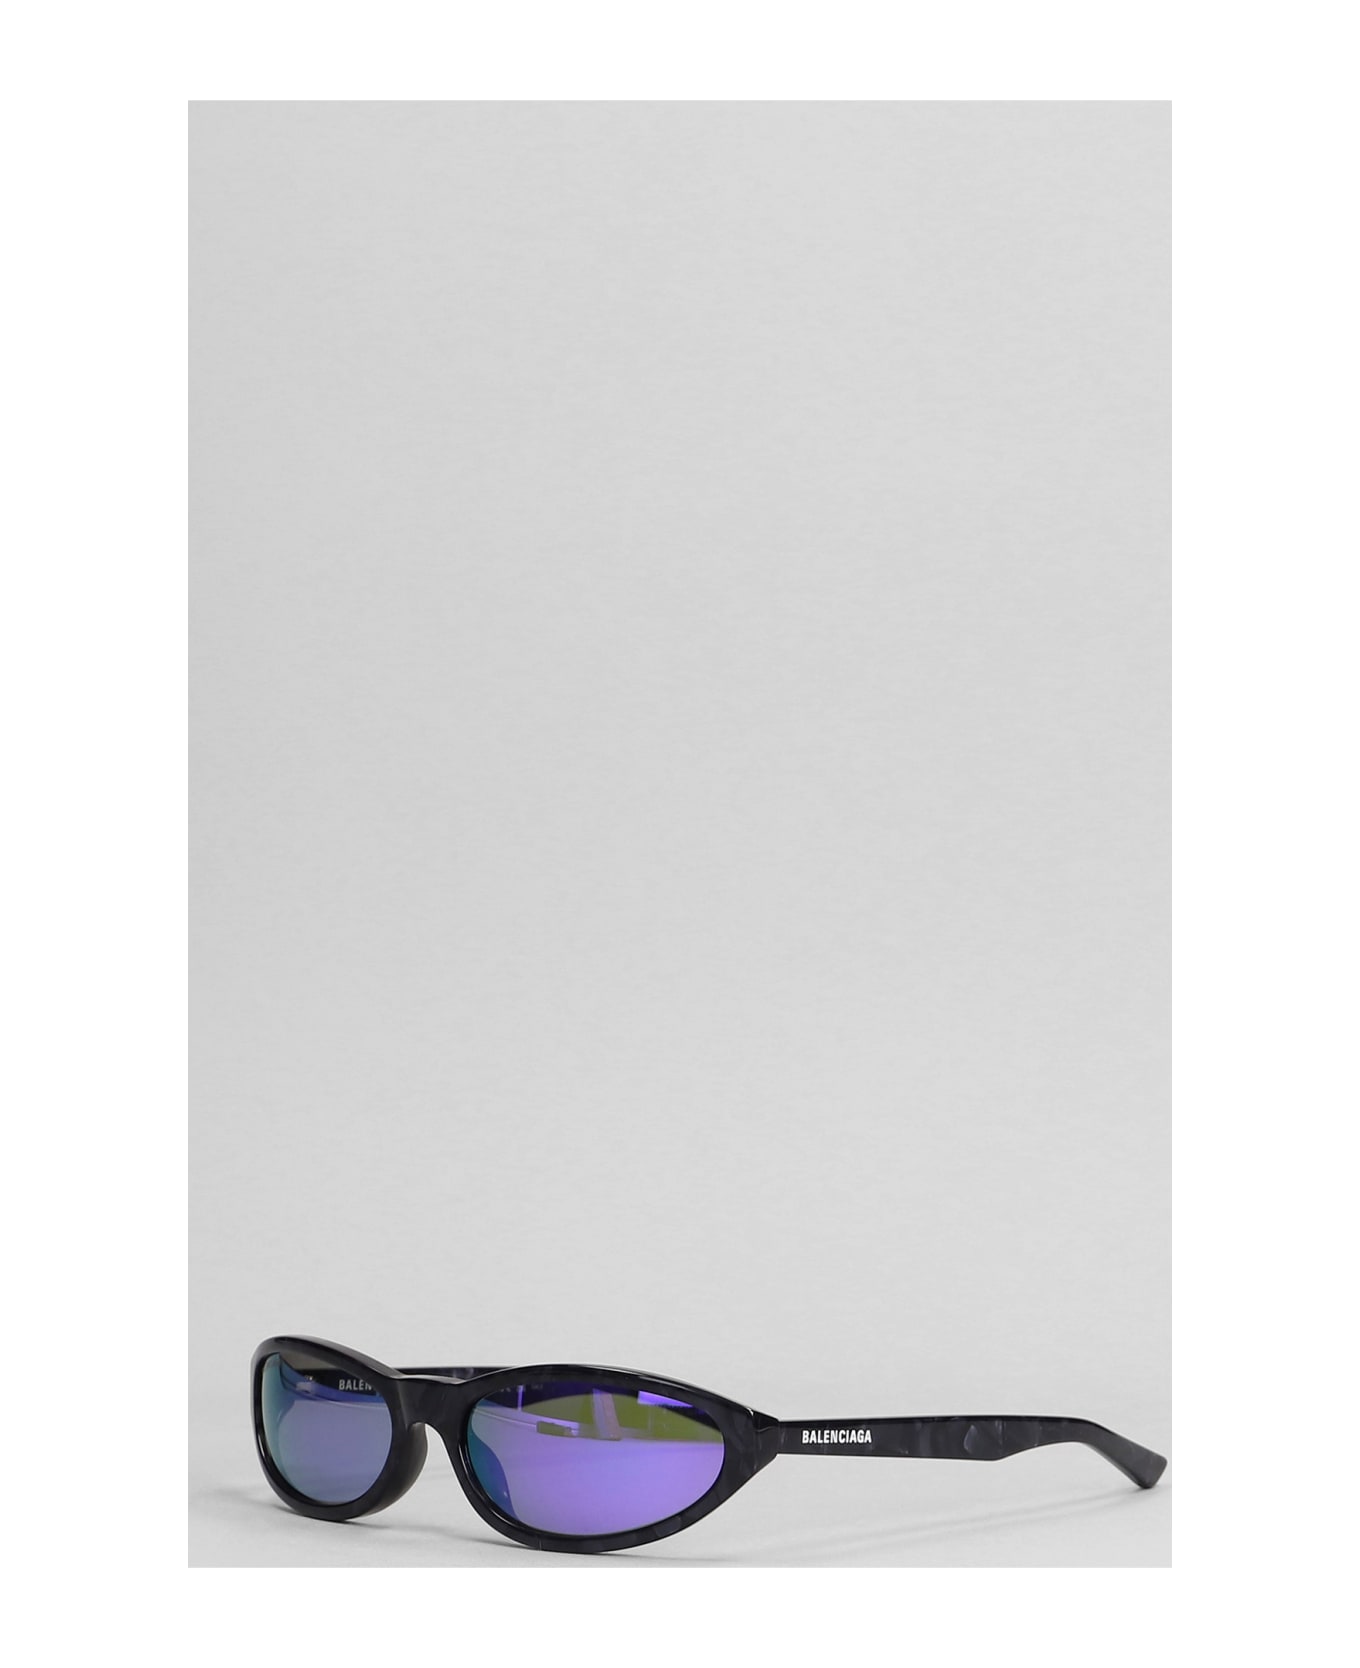 Balenciaga Neo Round Sunglasses In Viola Acetate - Viola アイウェア